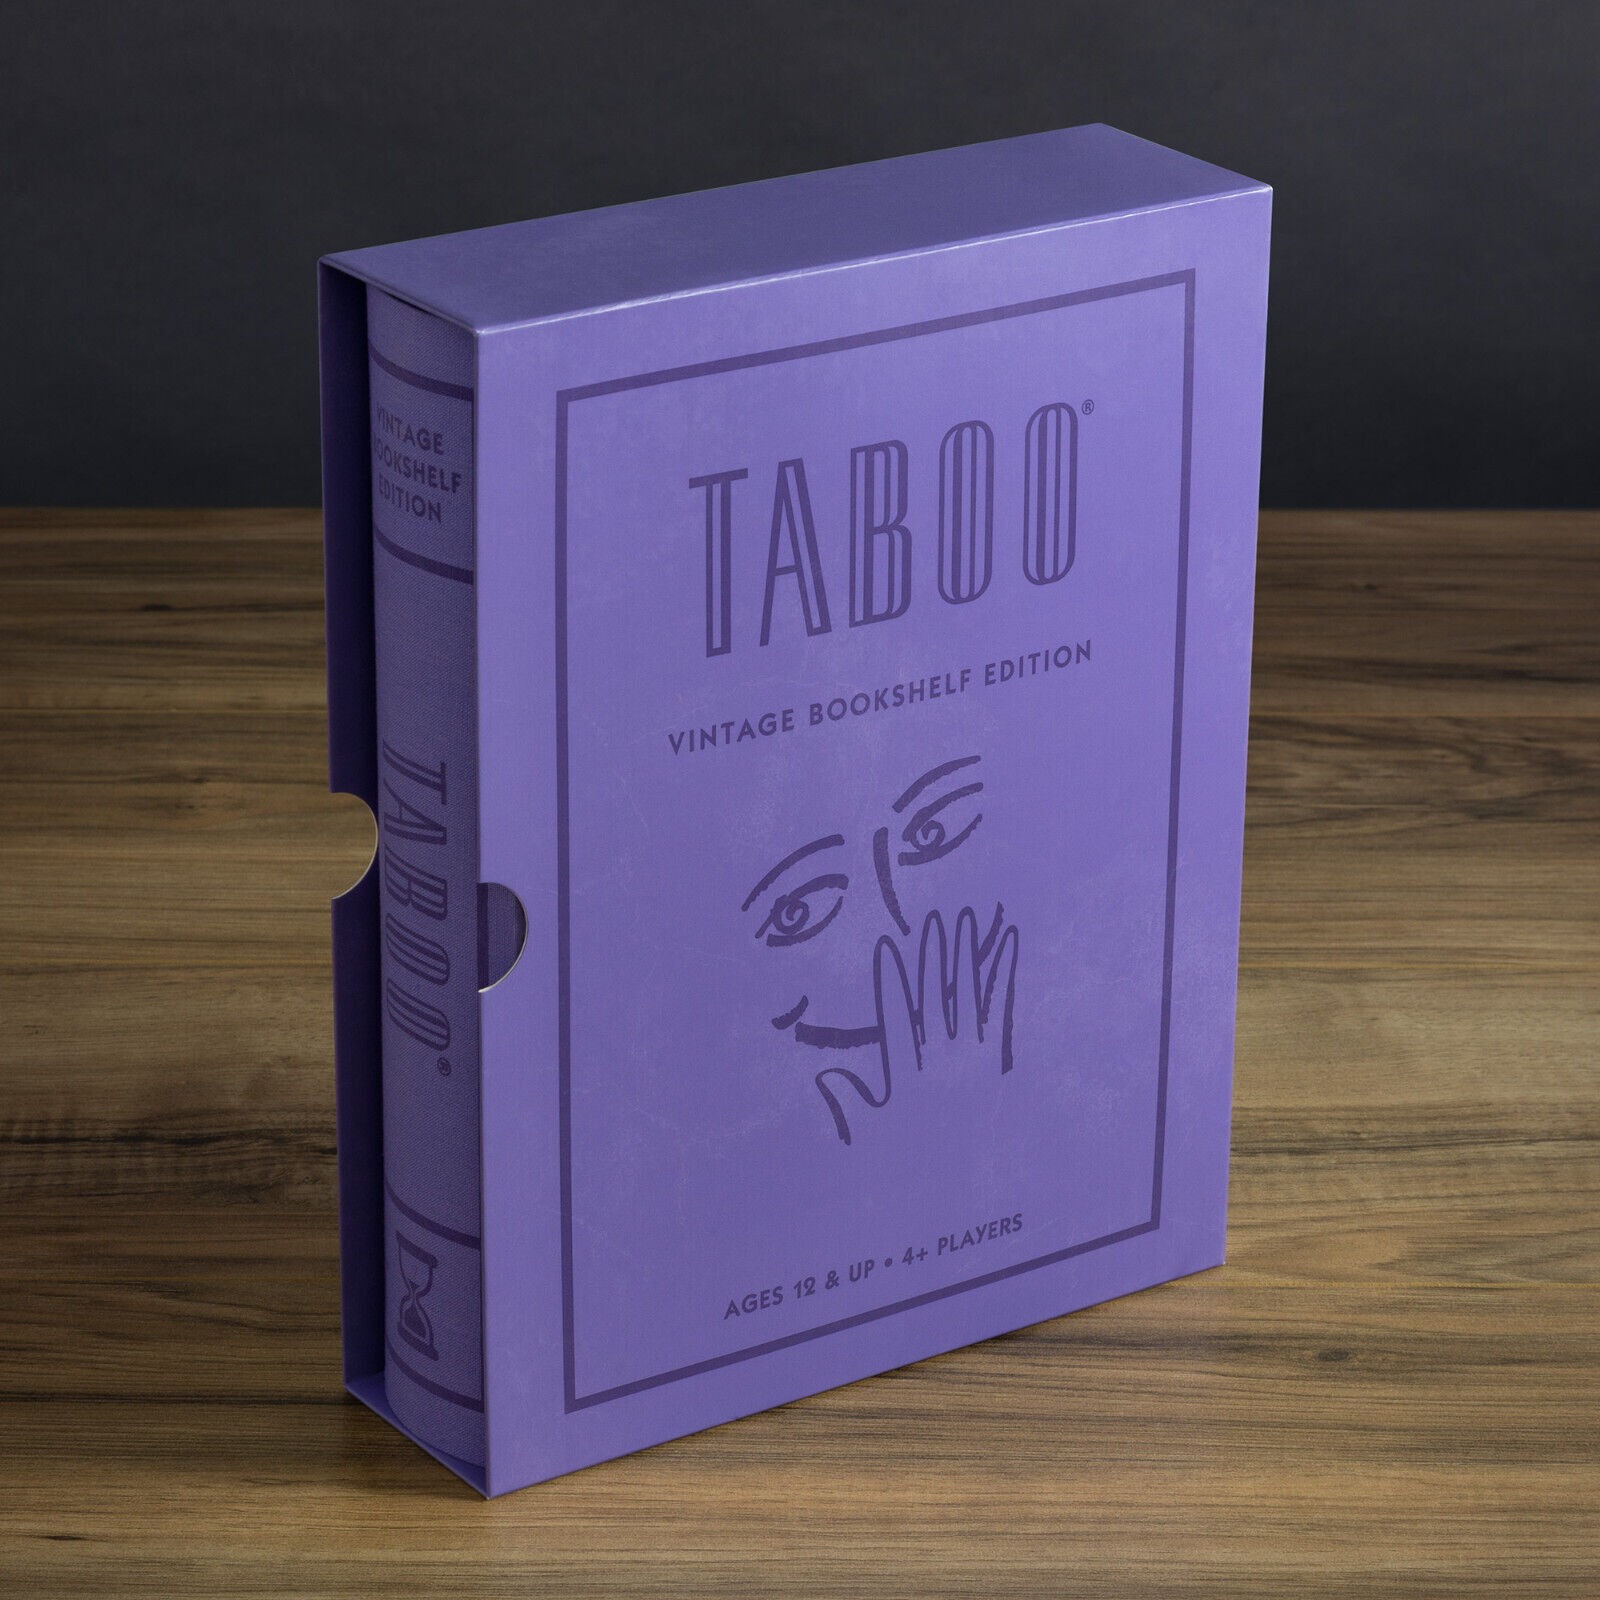 daniel szczepanik recommends Retro Taboo Videos